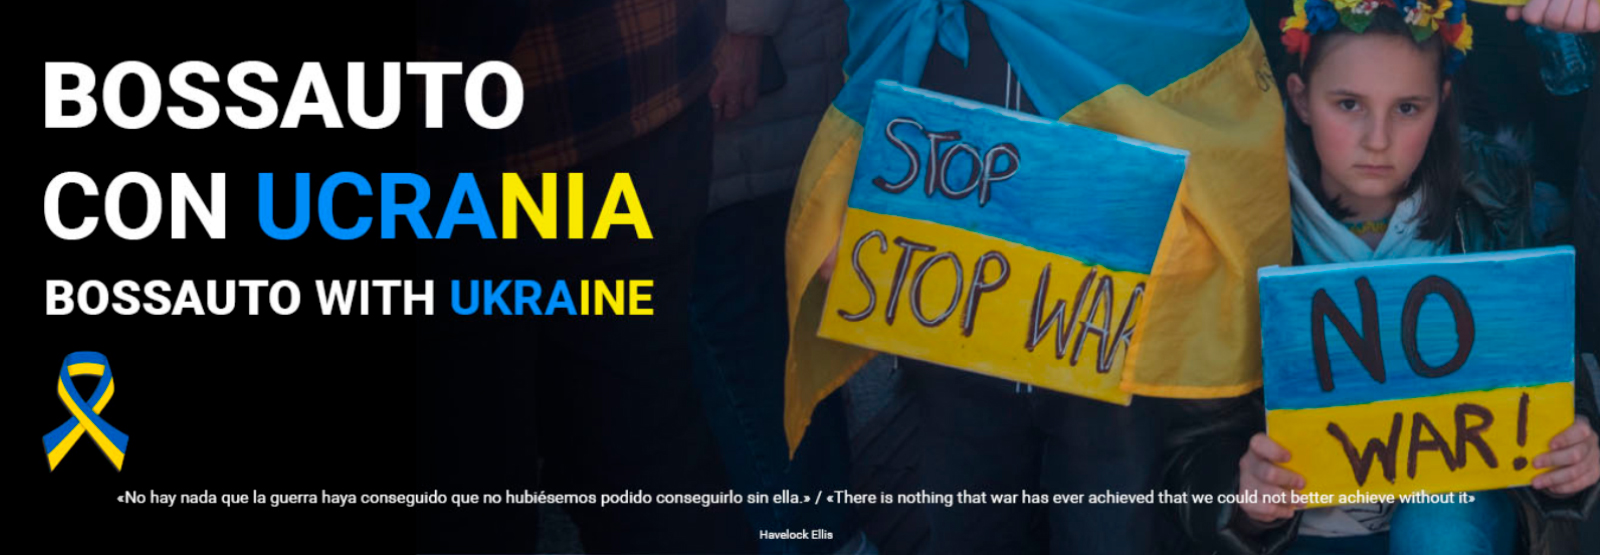 ucrania stop war bossauto 2022